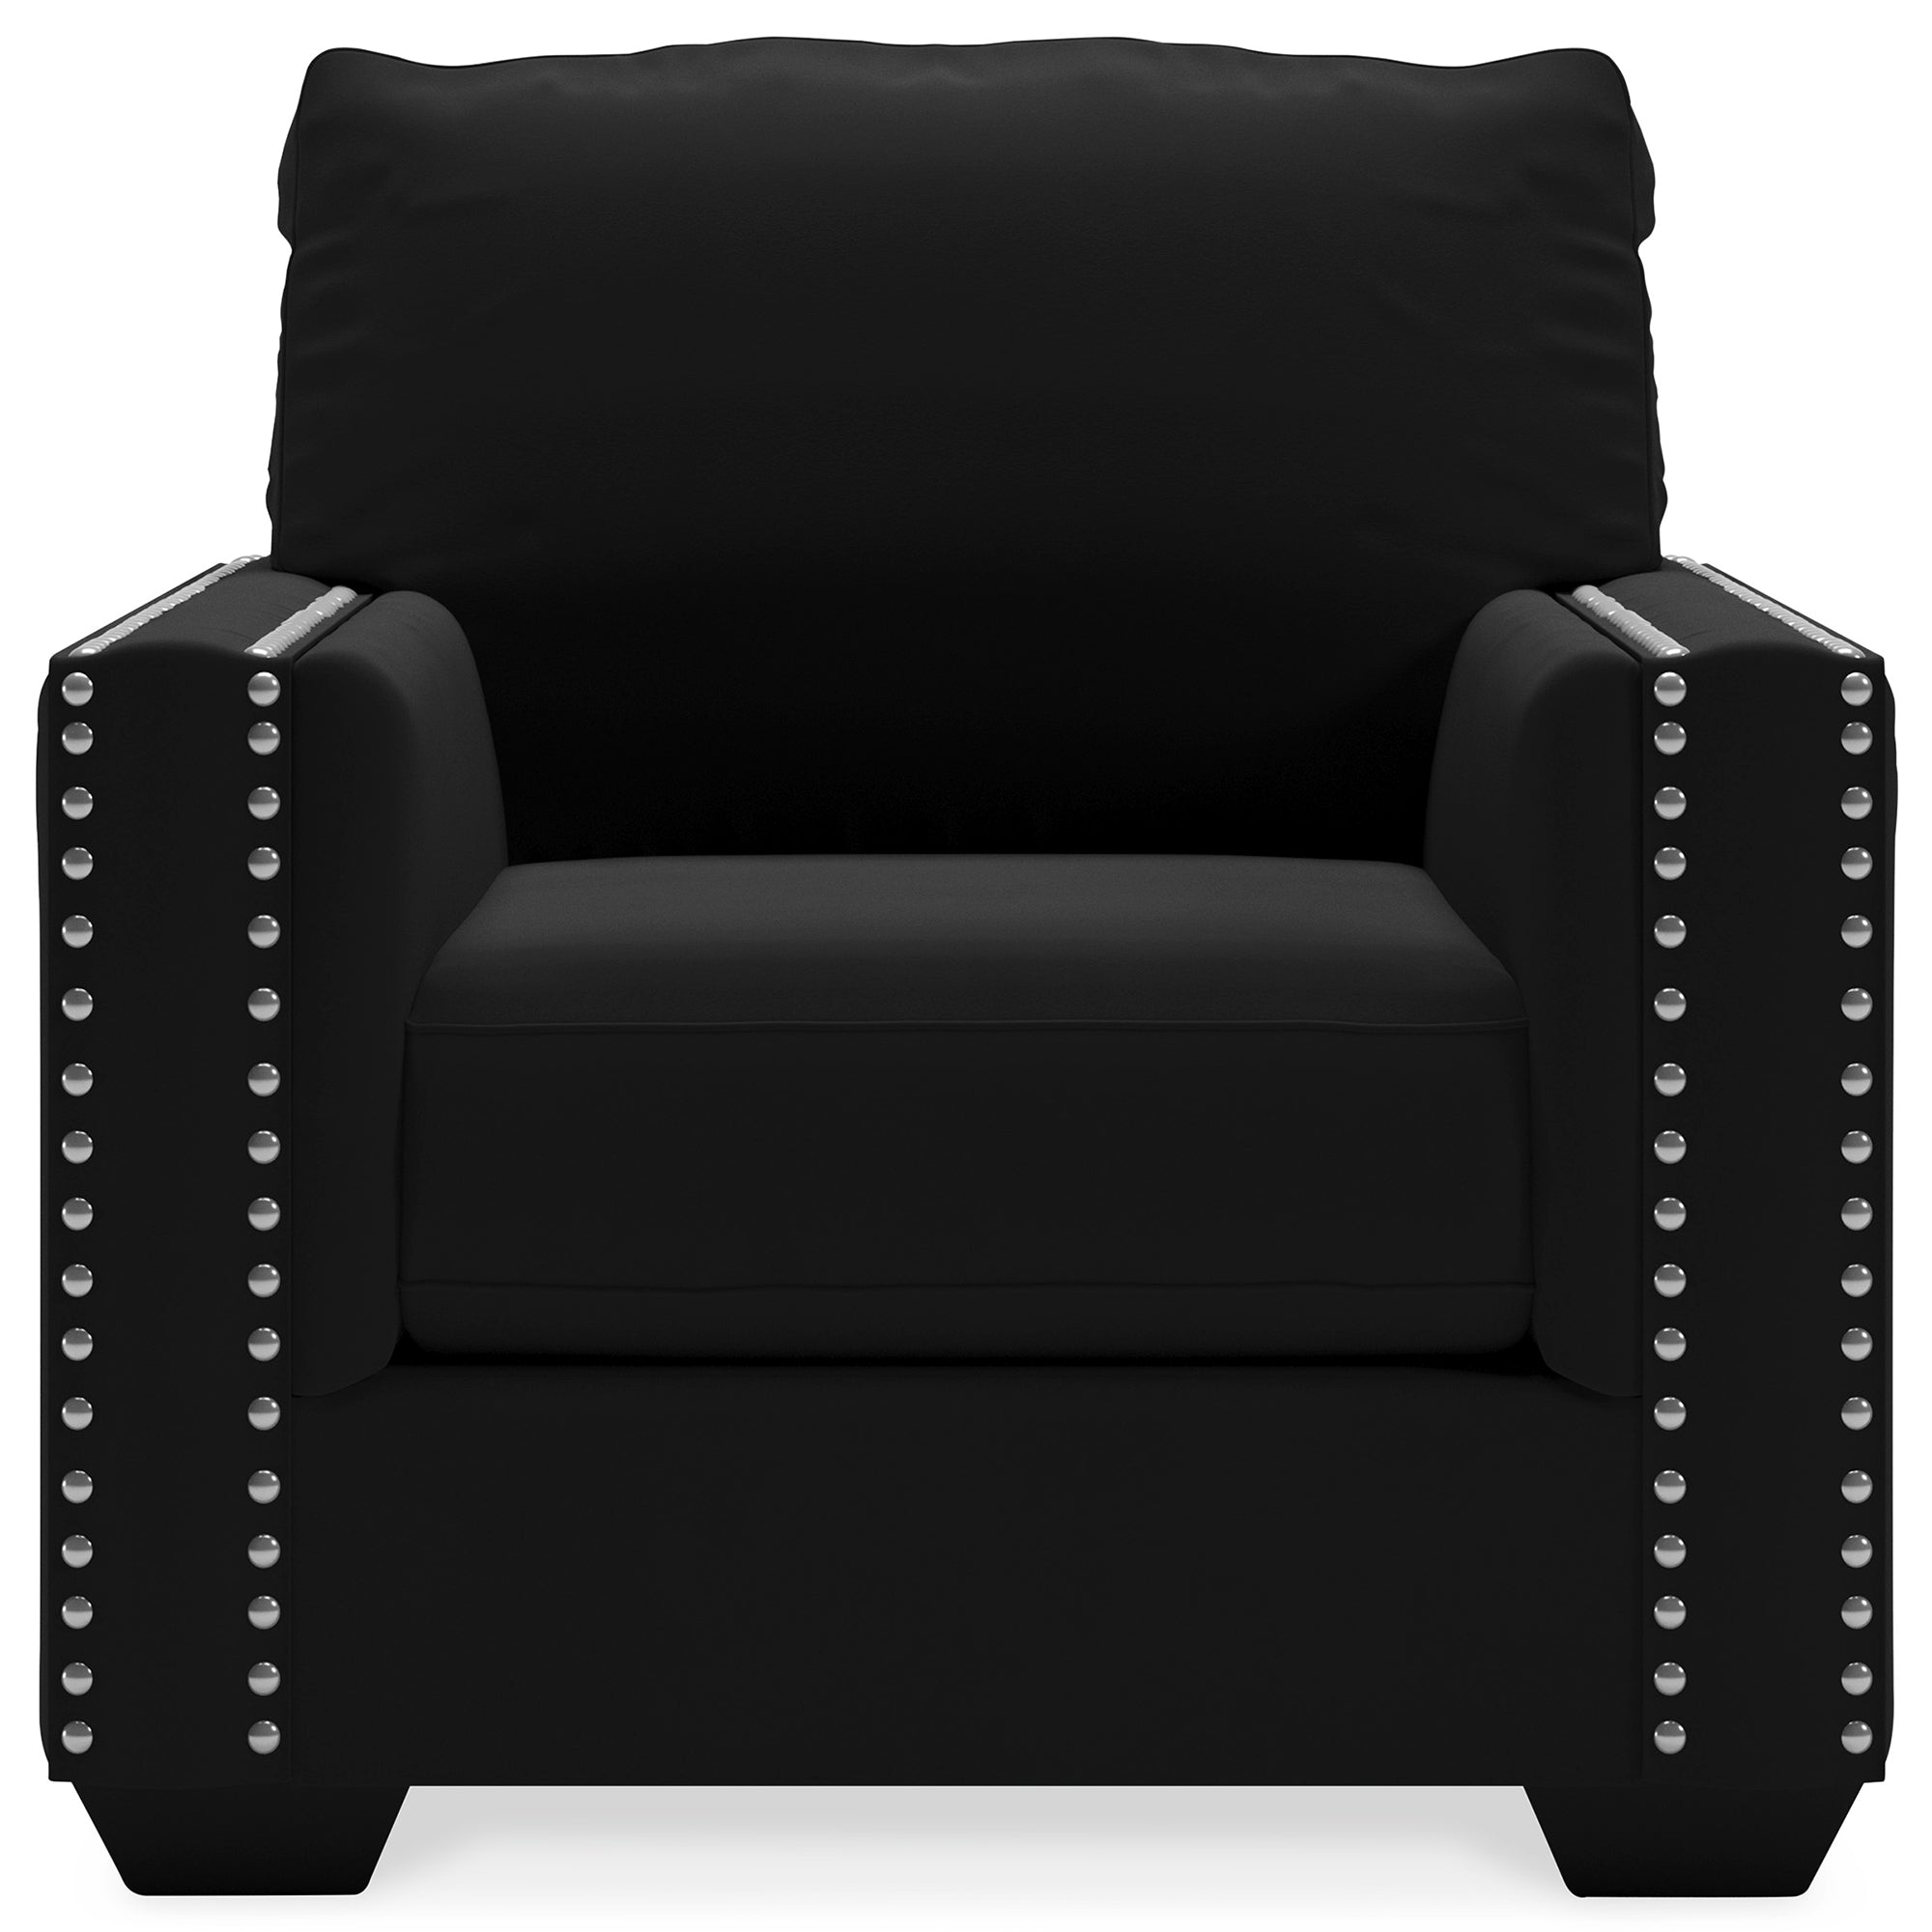 Gleston Chair